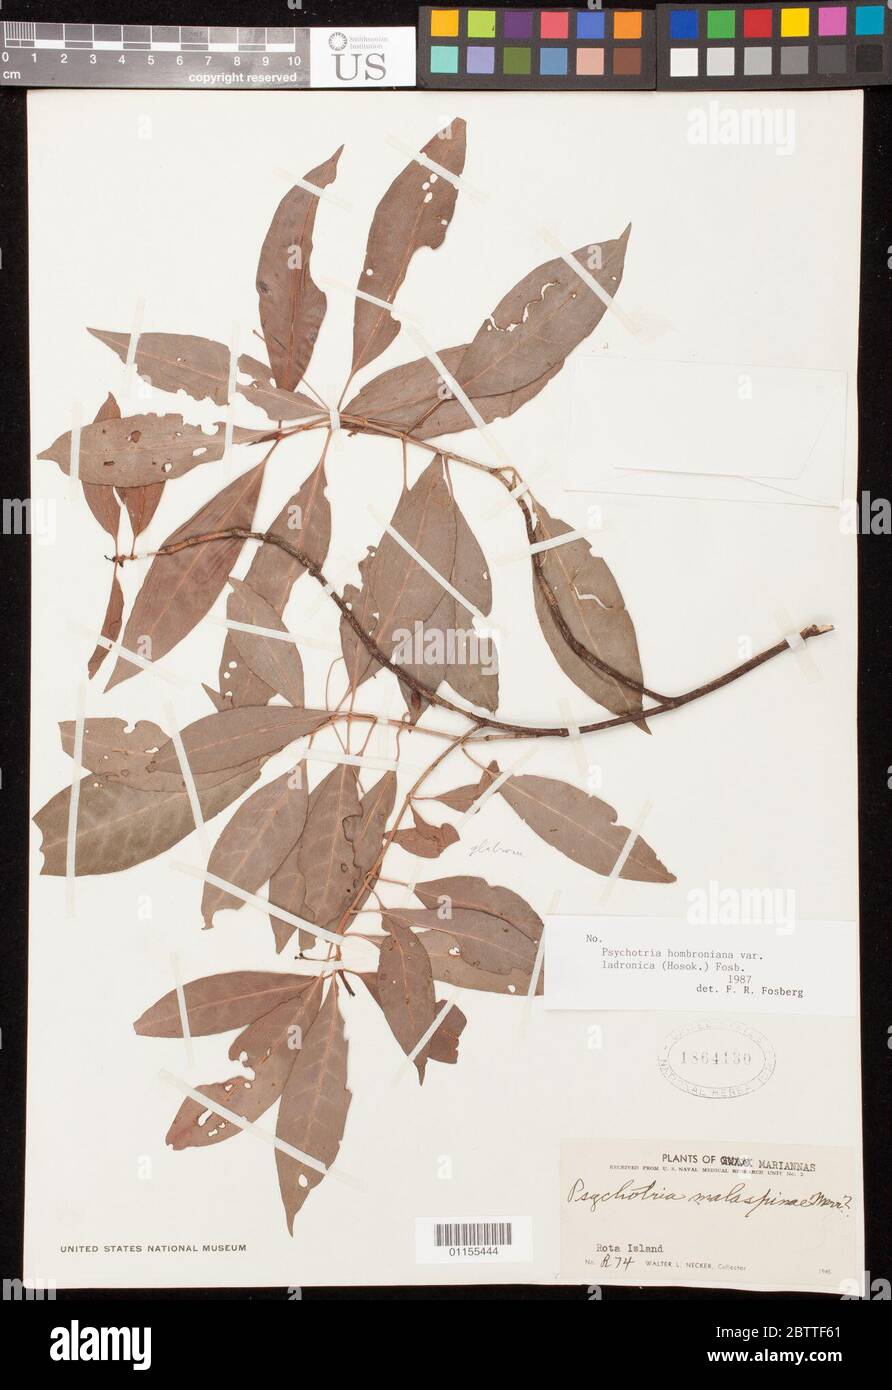 Psychotria hombroniana var ladronica Hosok Fosberg. Stock Photo